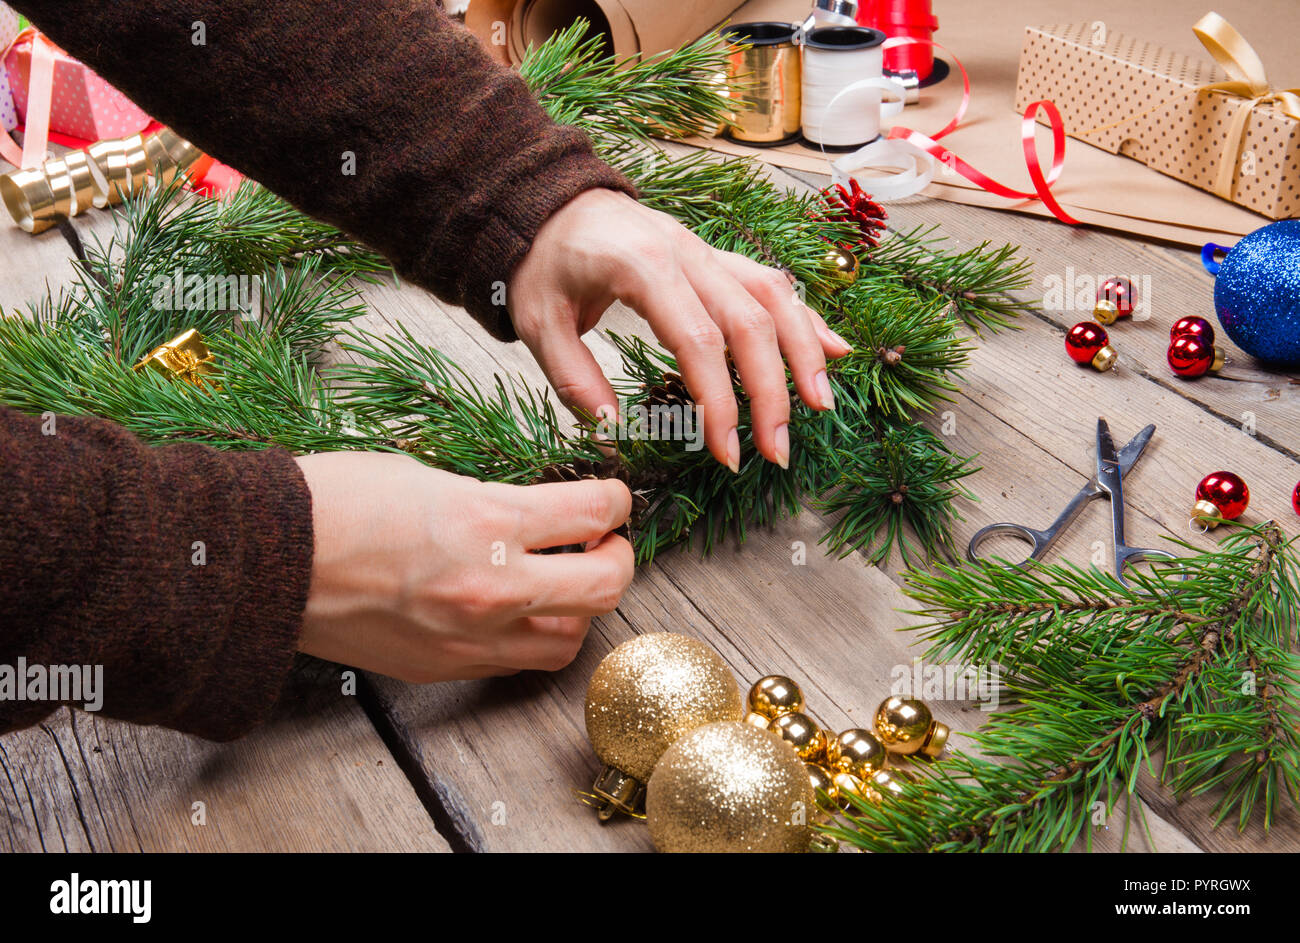 Woman making Christmas wreath Stock Photo